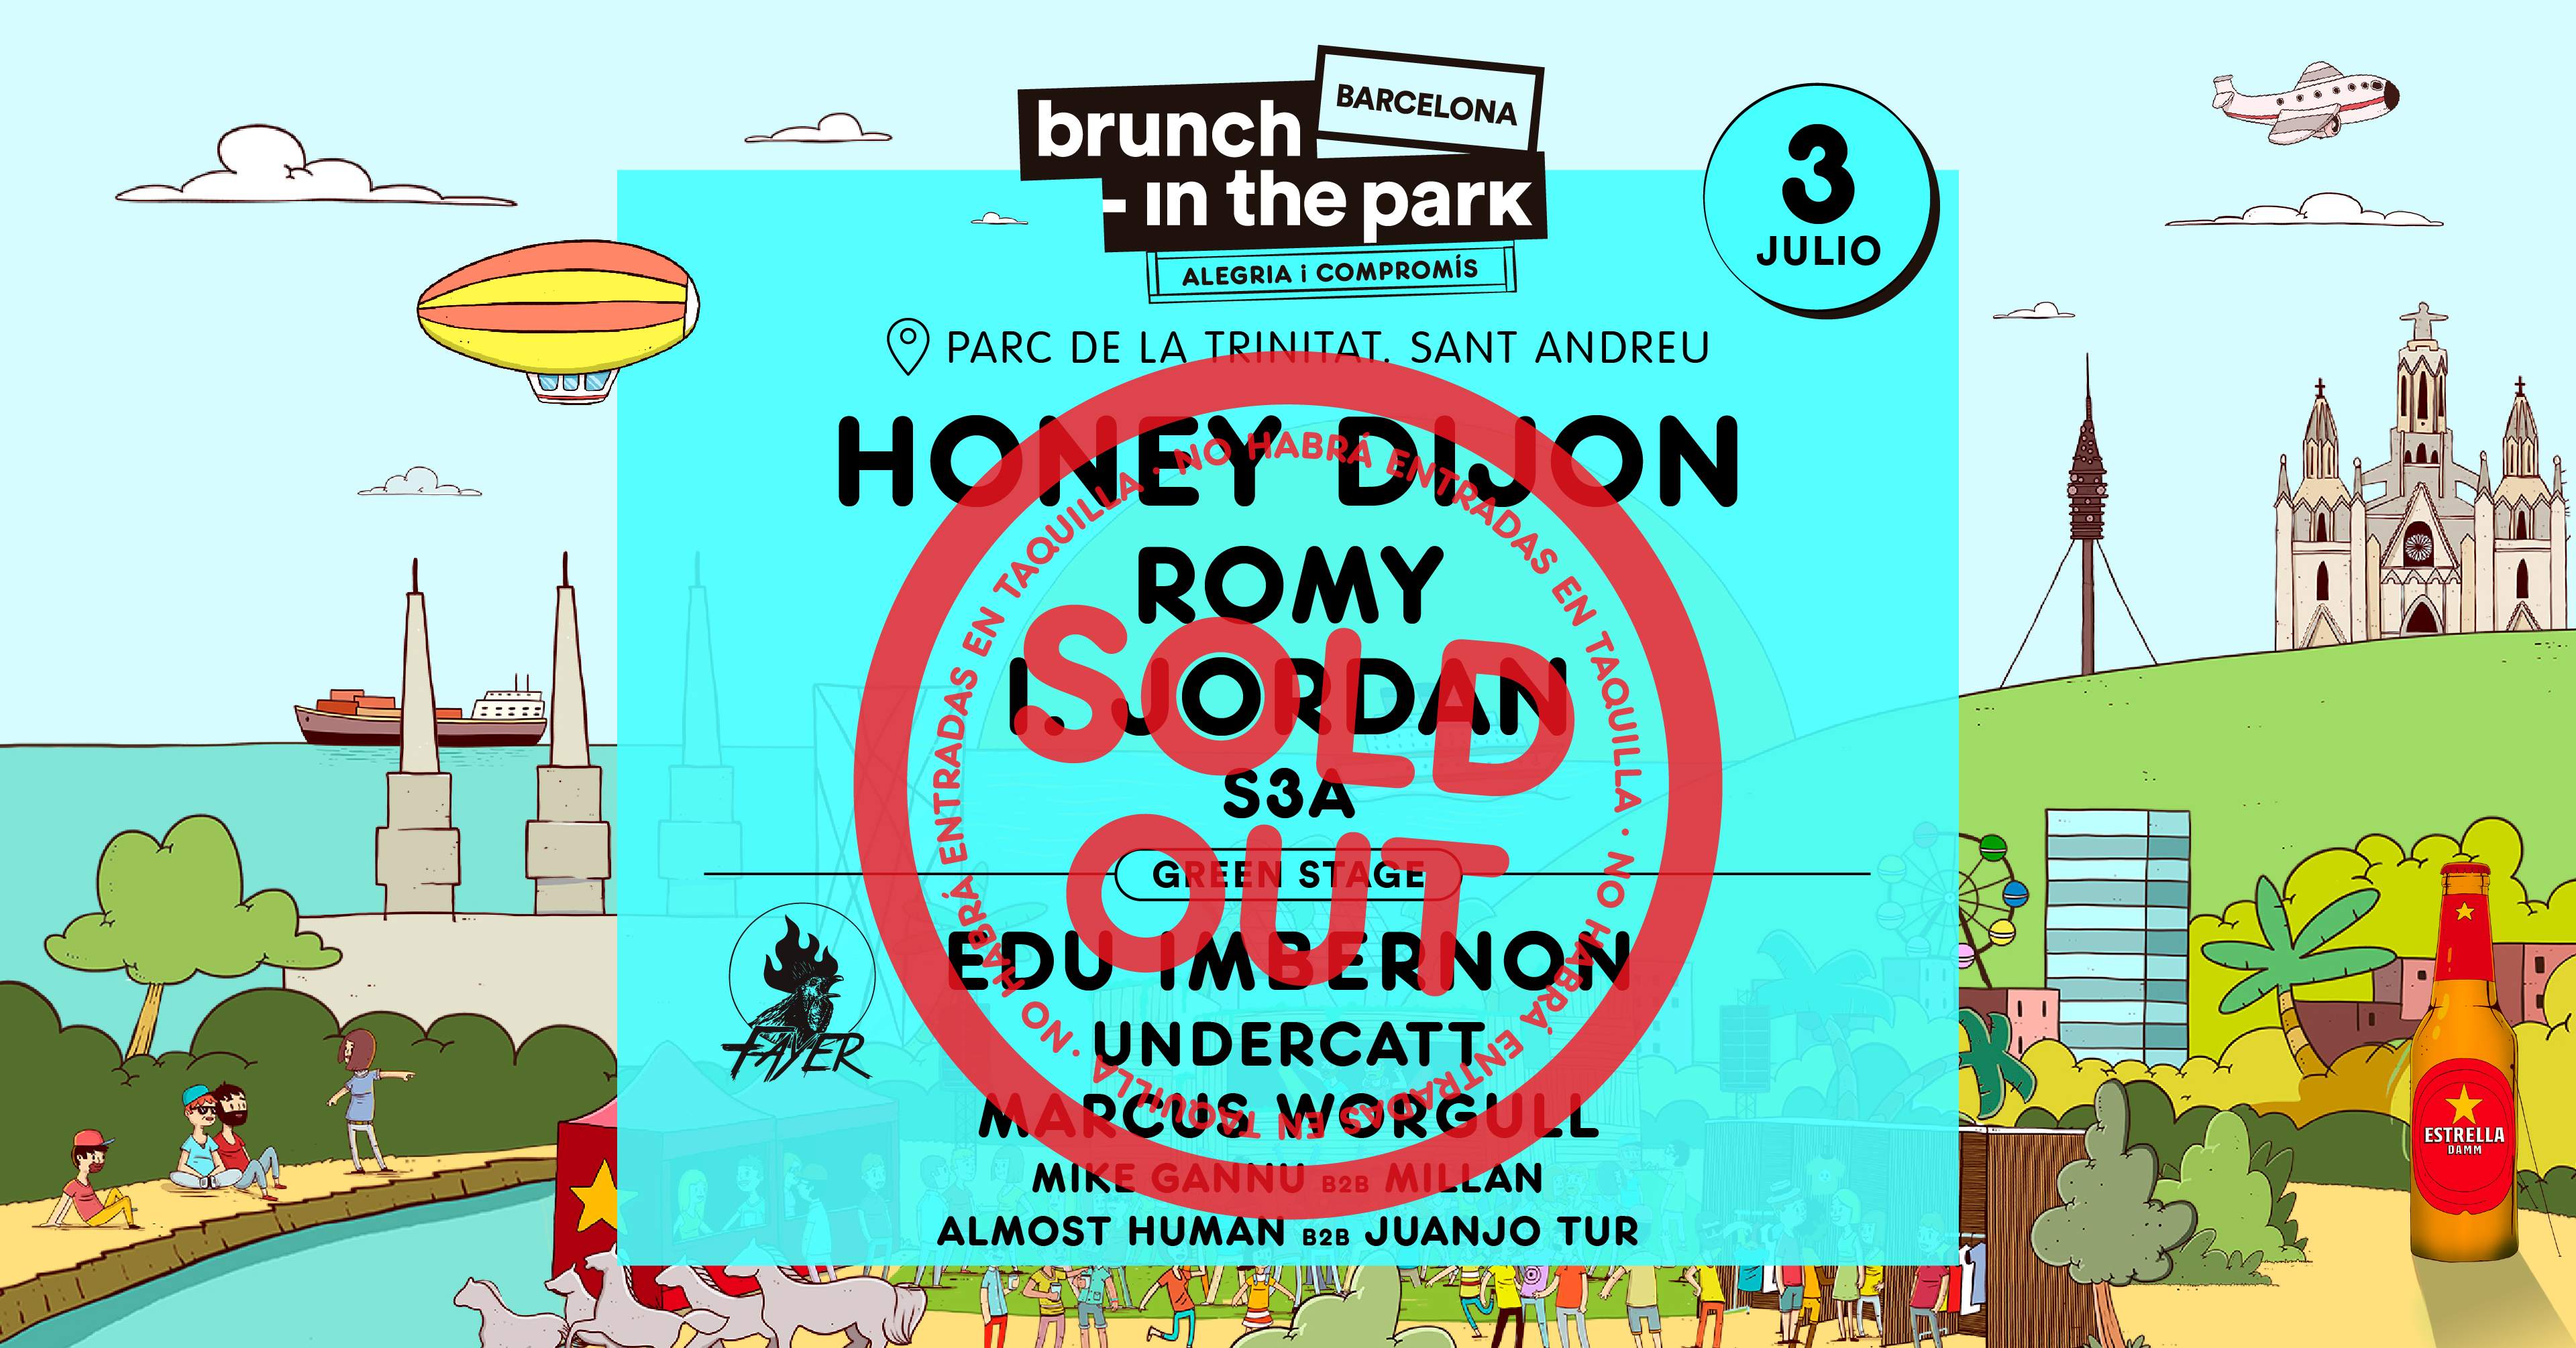 *SOLD OUT* Brunch -In the Park #1: Honey Dijon, Romy, IJordan, S3A, Edu Imbernon y más - Página trasera